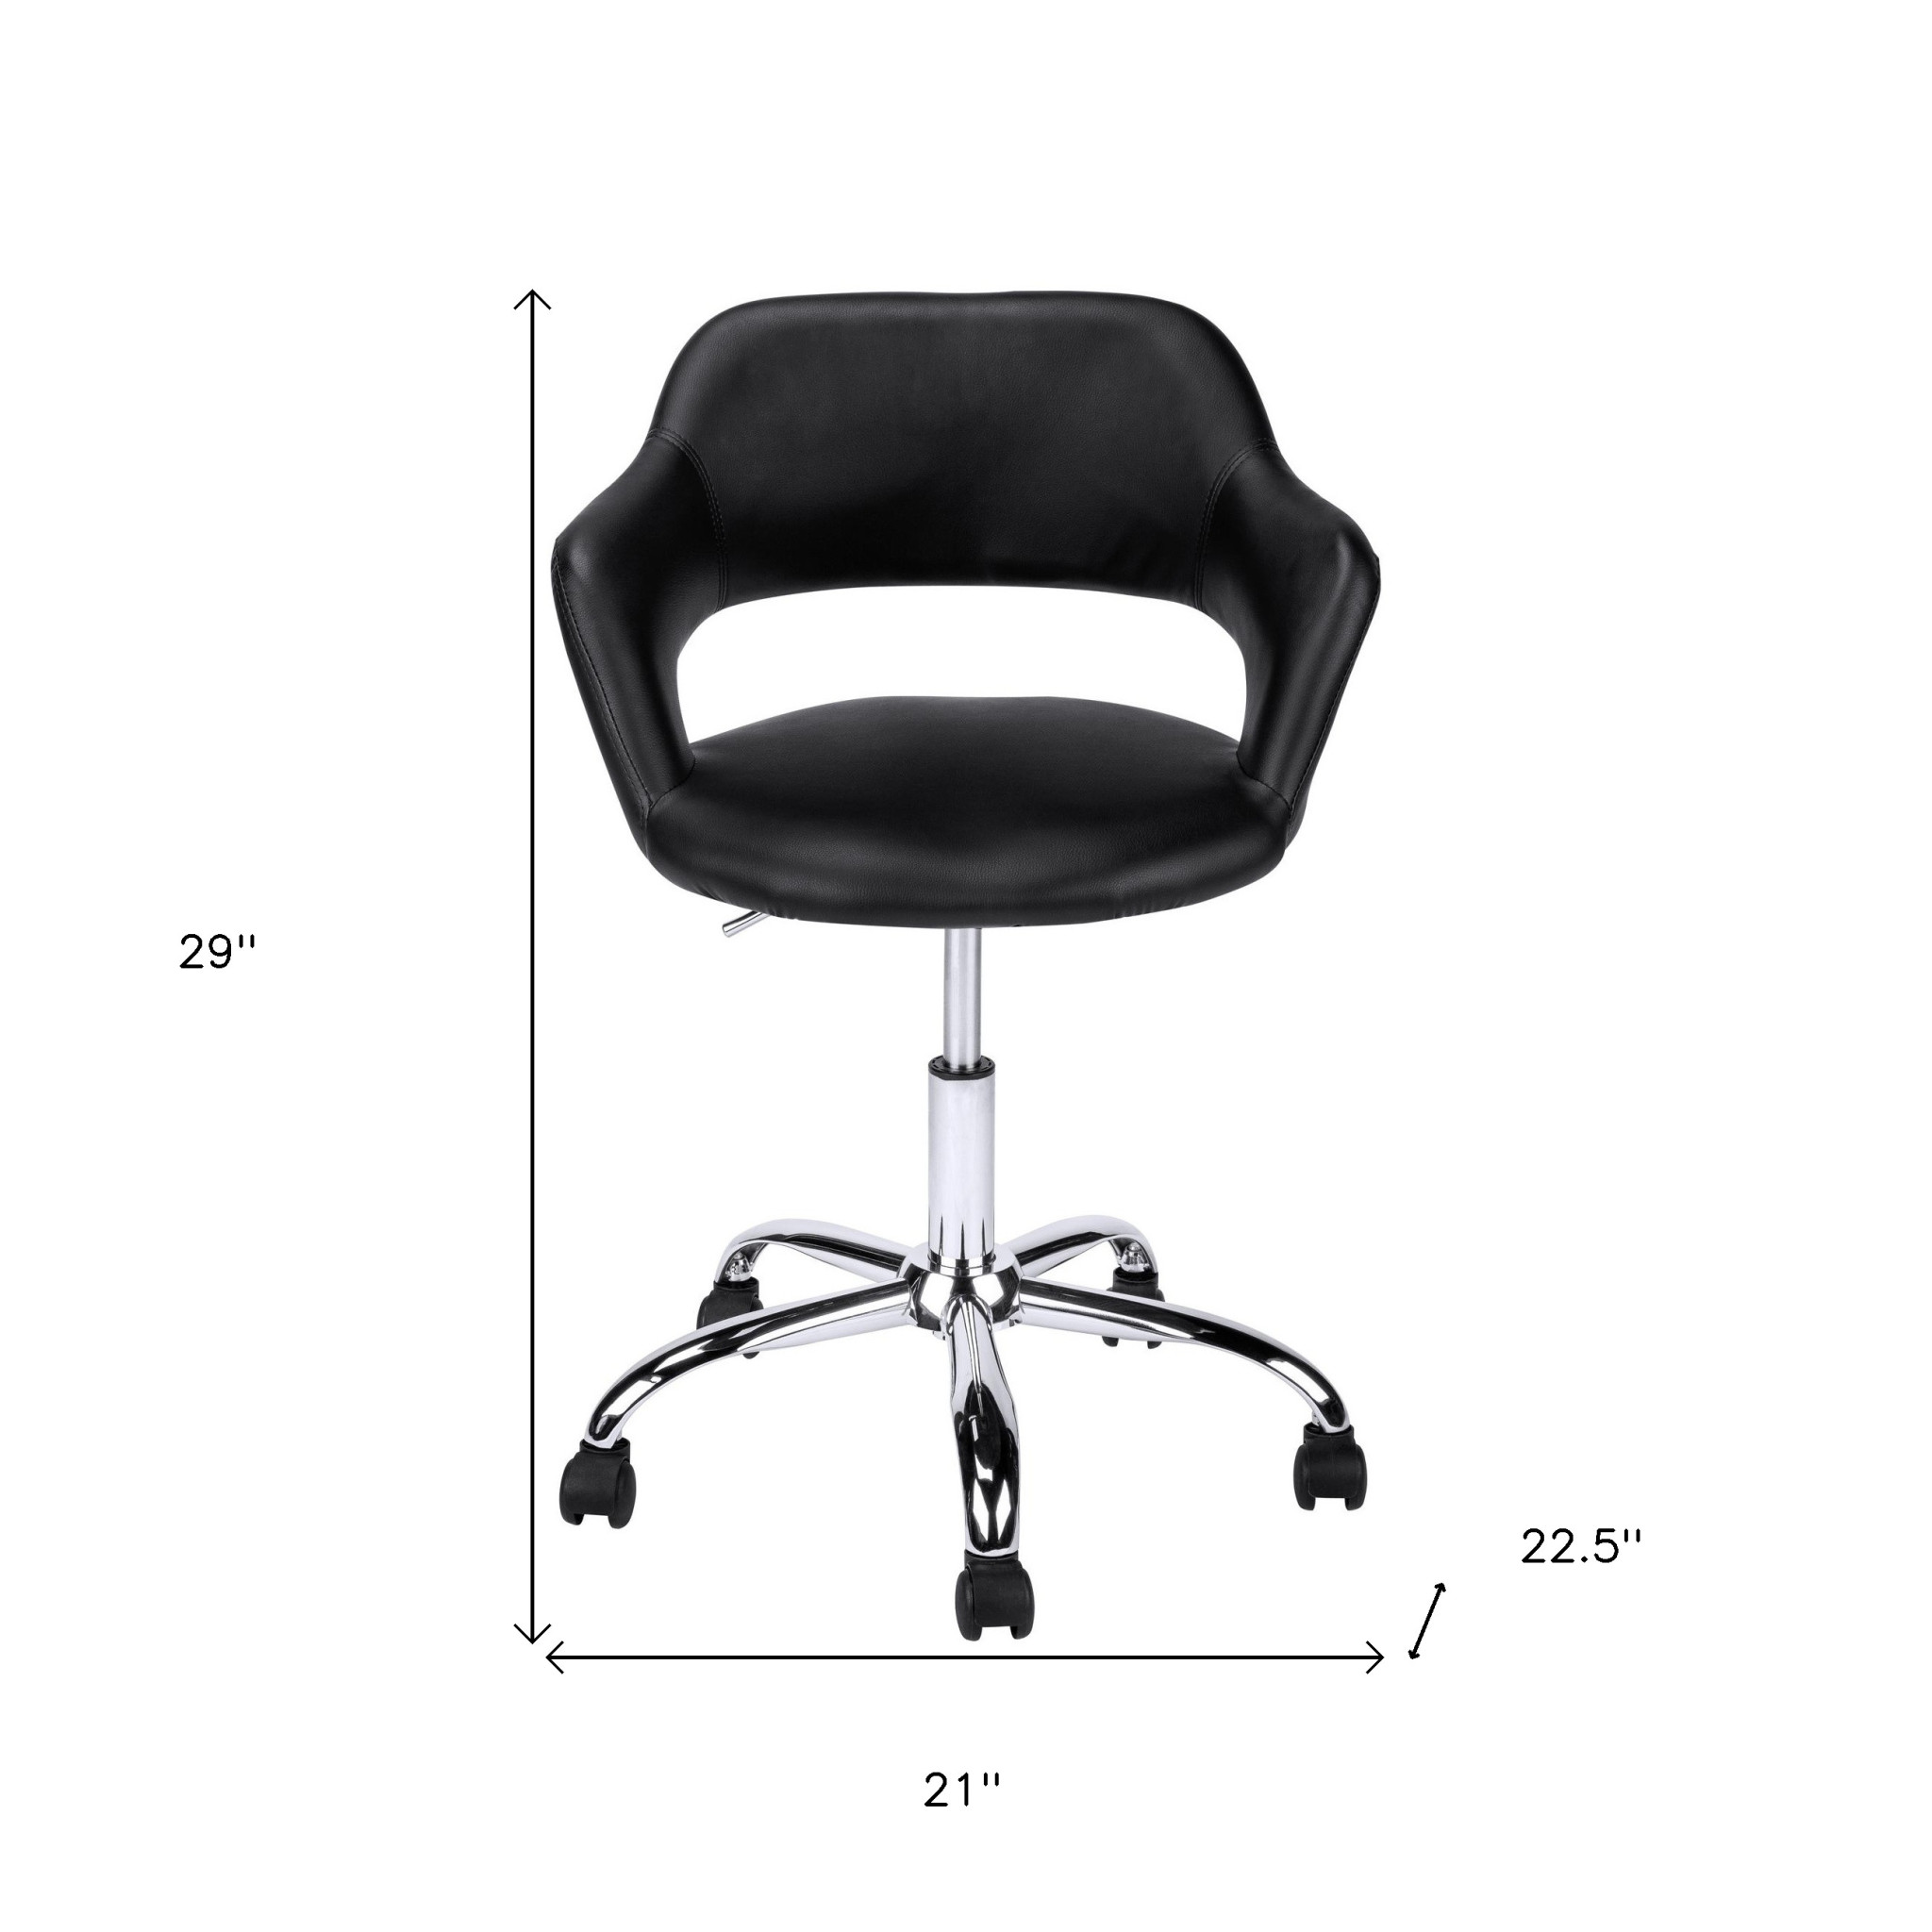 21" x 22.5" x 29" BlackChrome Metal Hydraulic Lift Base Office Chair